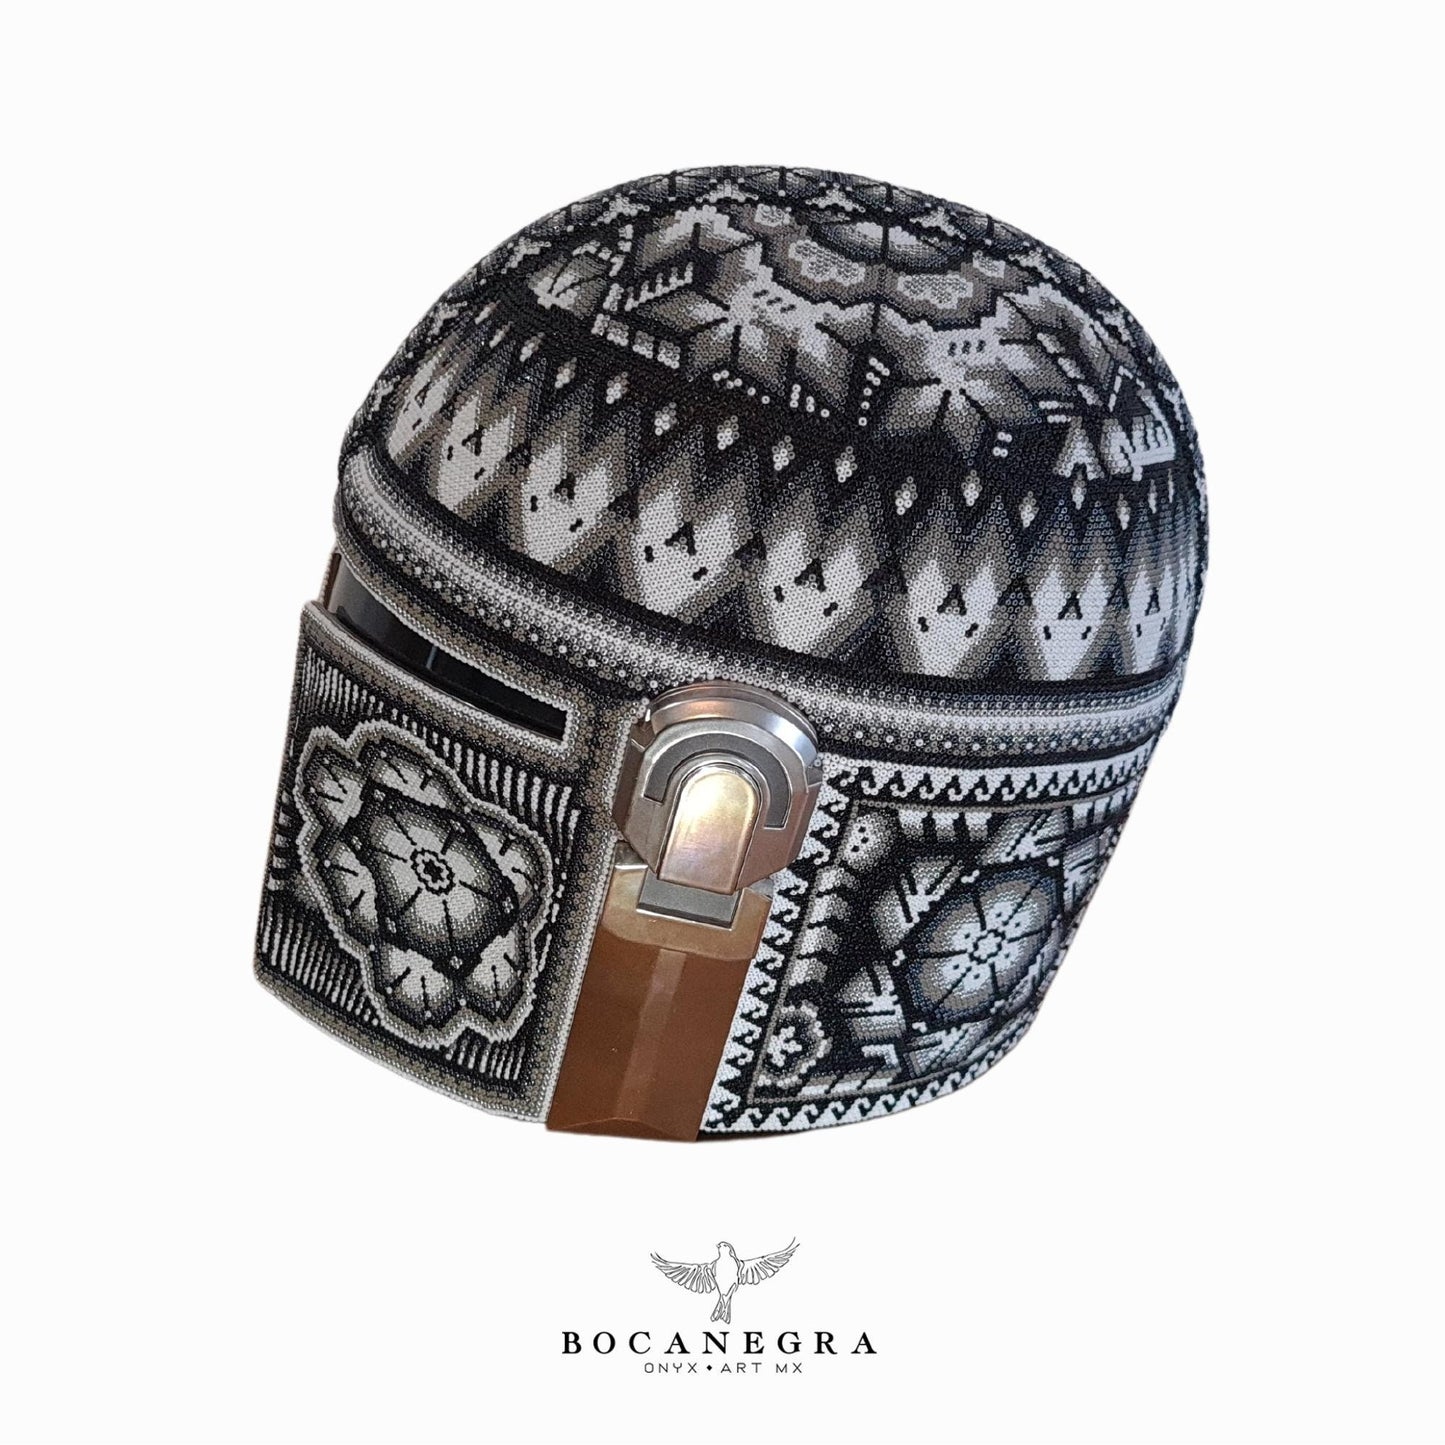 Huichol Art Helmet - The Mandalorian Helmet - Out of this world  - Huichol Art - Handmade